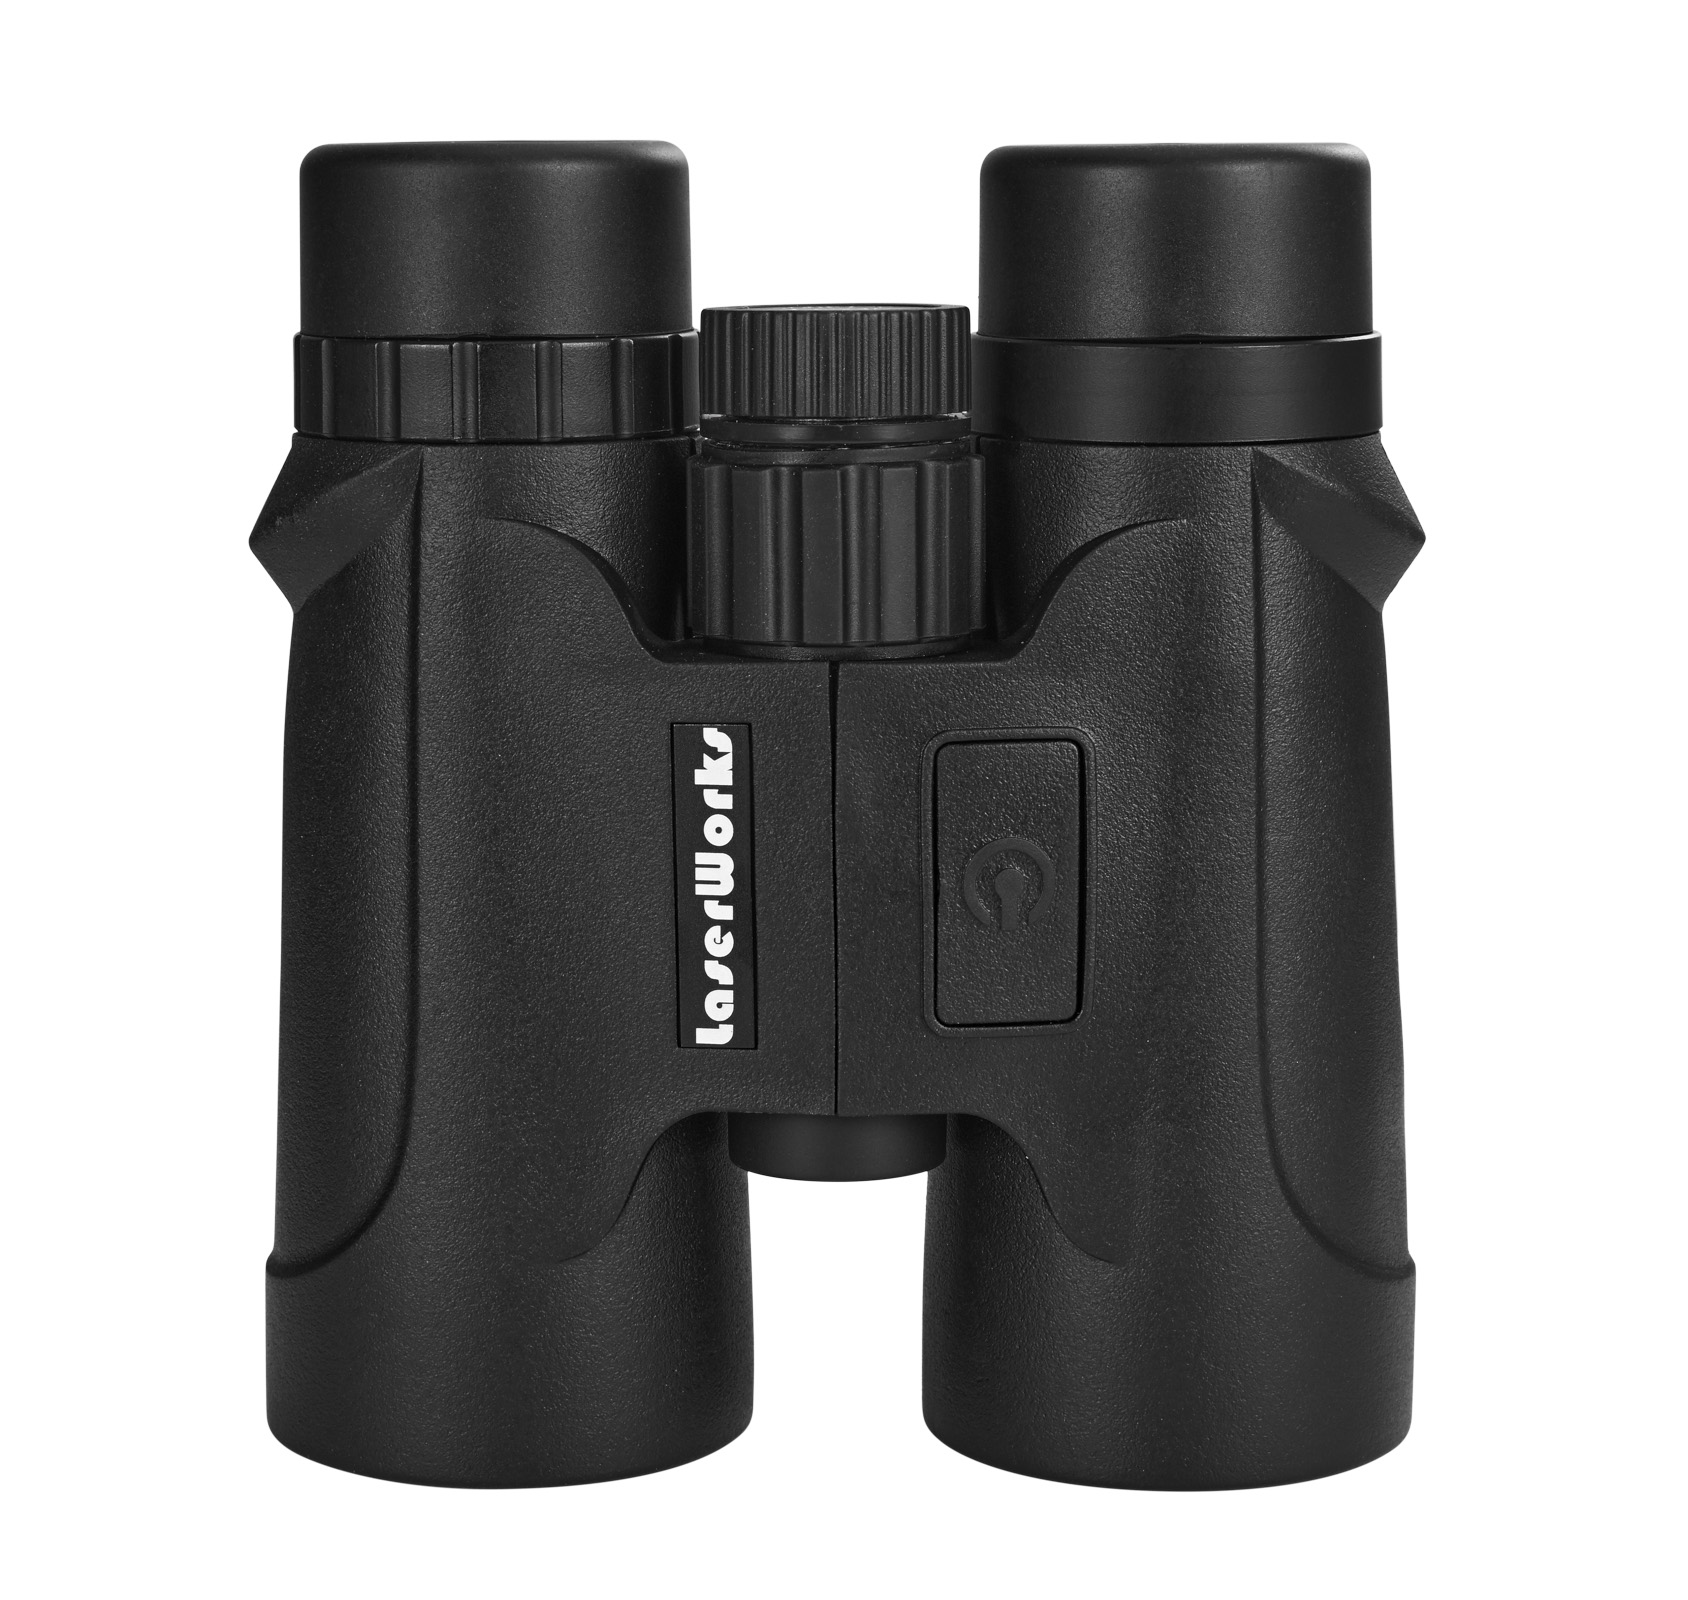 LaserWorks Rangefinder Binoculars TD1300 with 8x magnification and 21mm objective lenses